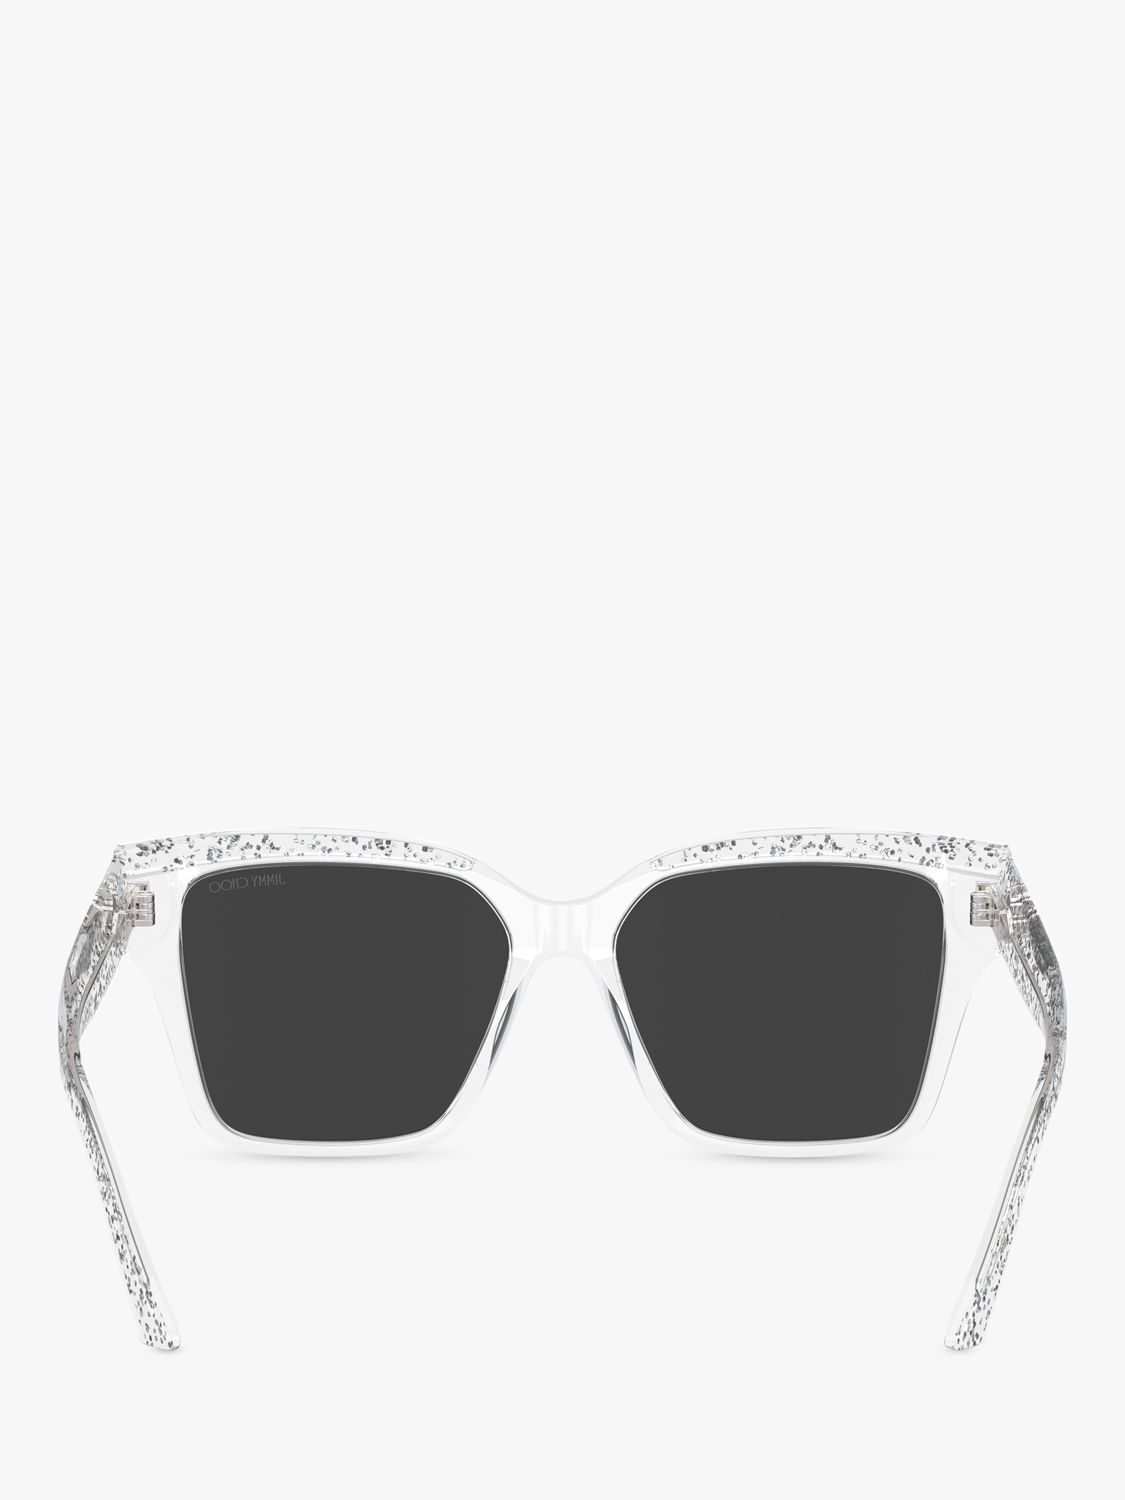 Jimmy Choo JC5003 Women's Square Sunglasses, Crystal Glitter/Silver